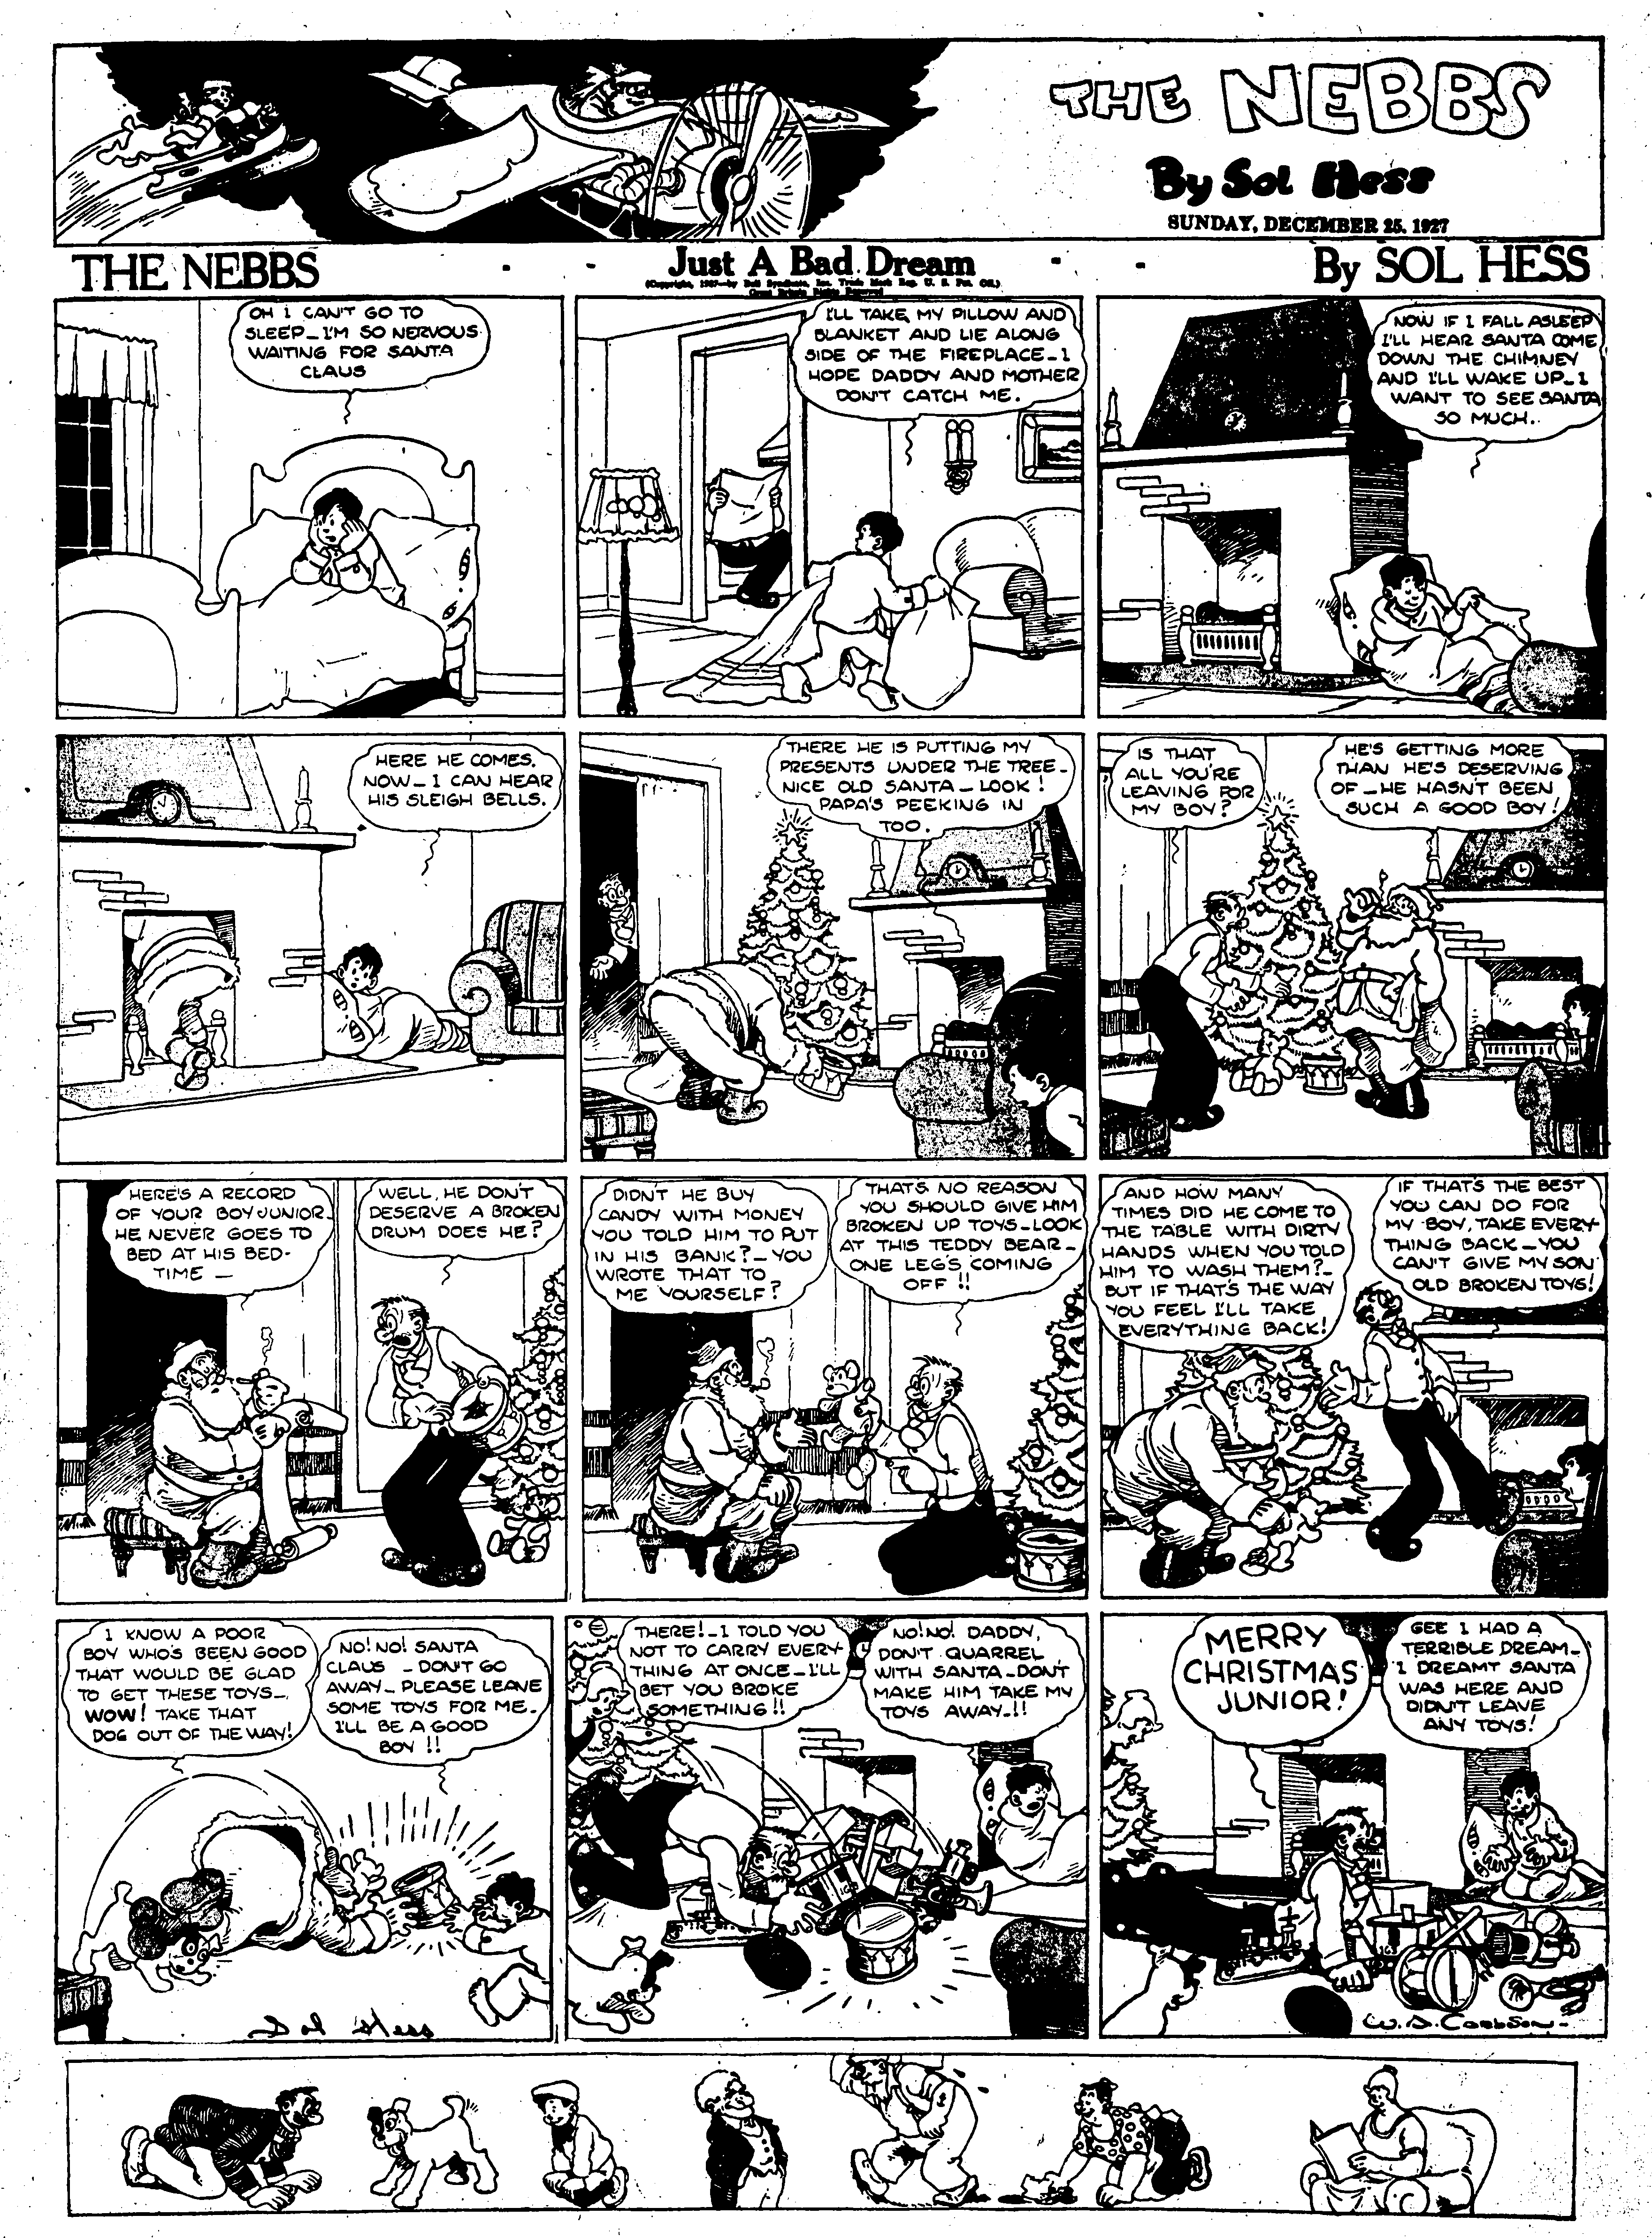 The Nebbs, December 25, 1927